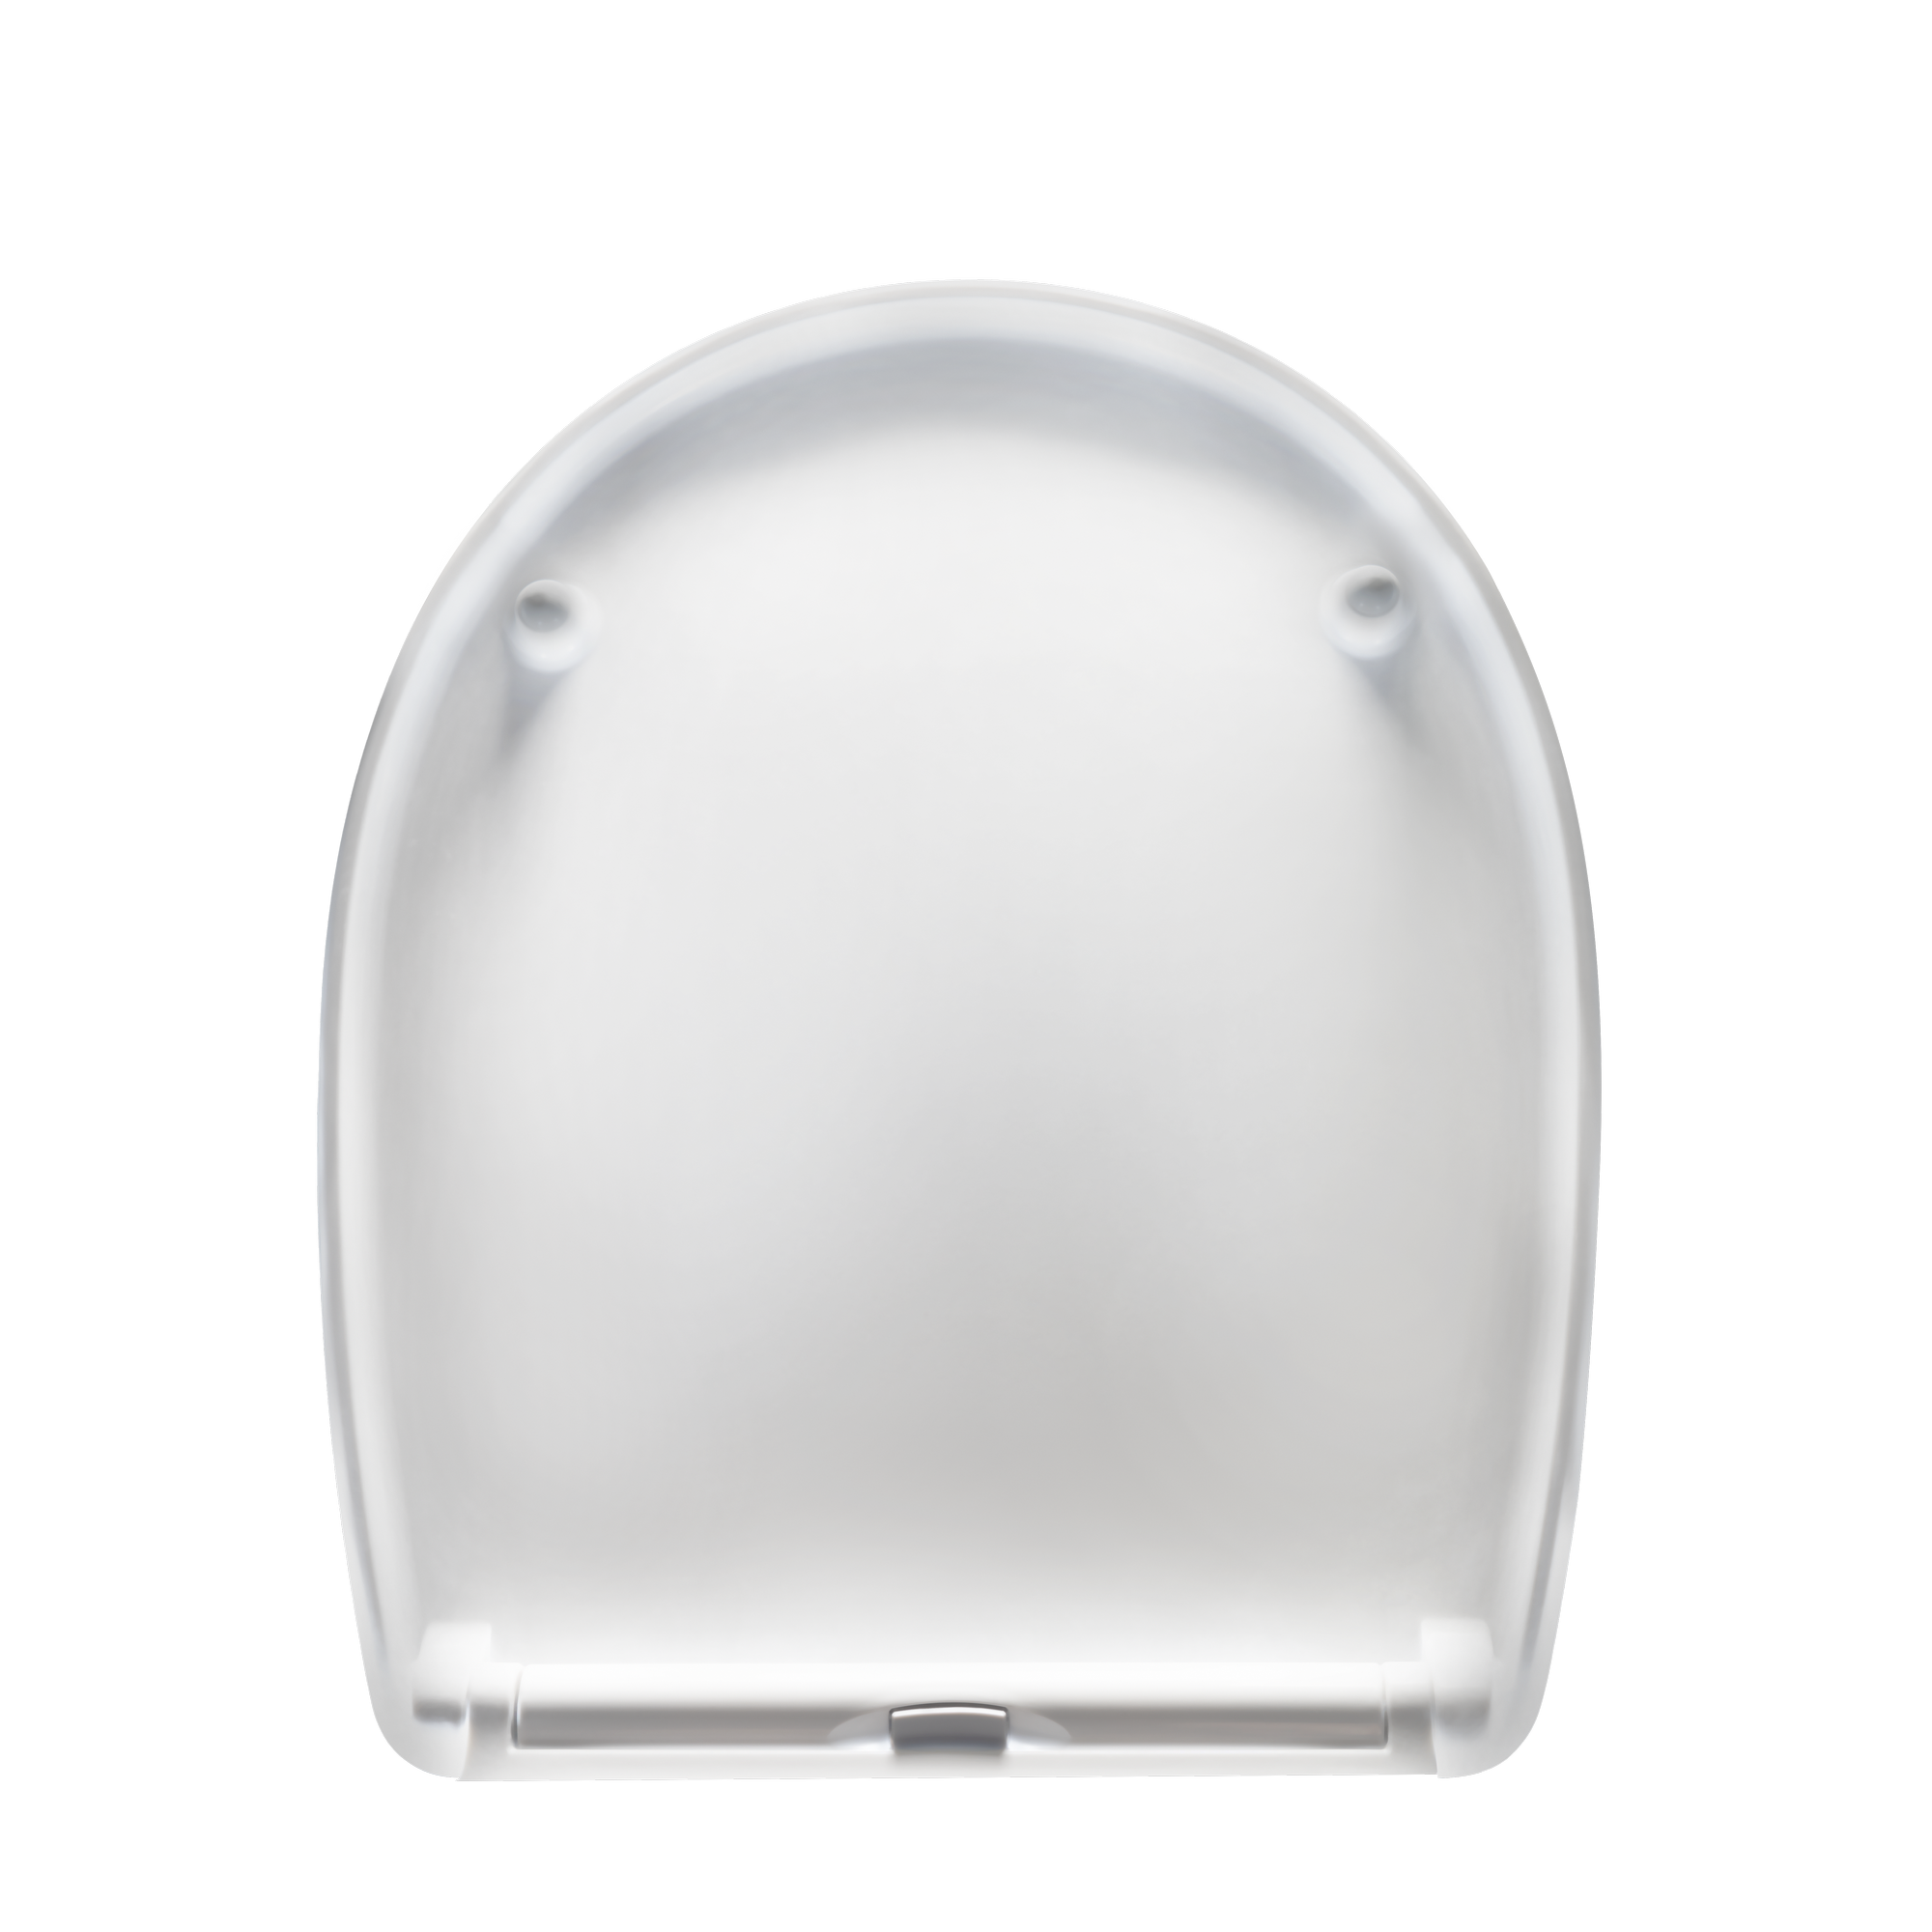 WC-Sitz 'Einklang' Duroplast mit Absenkautomatik beige/grau + product picture